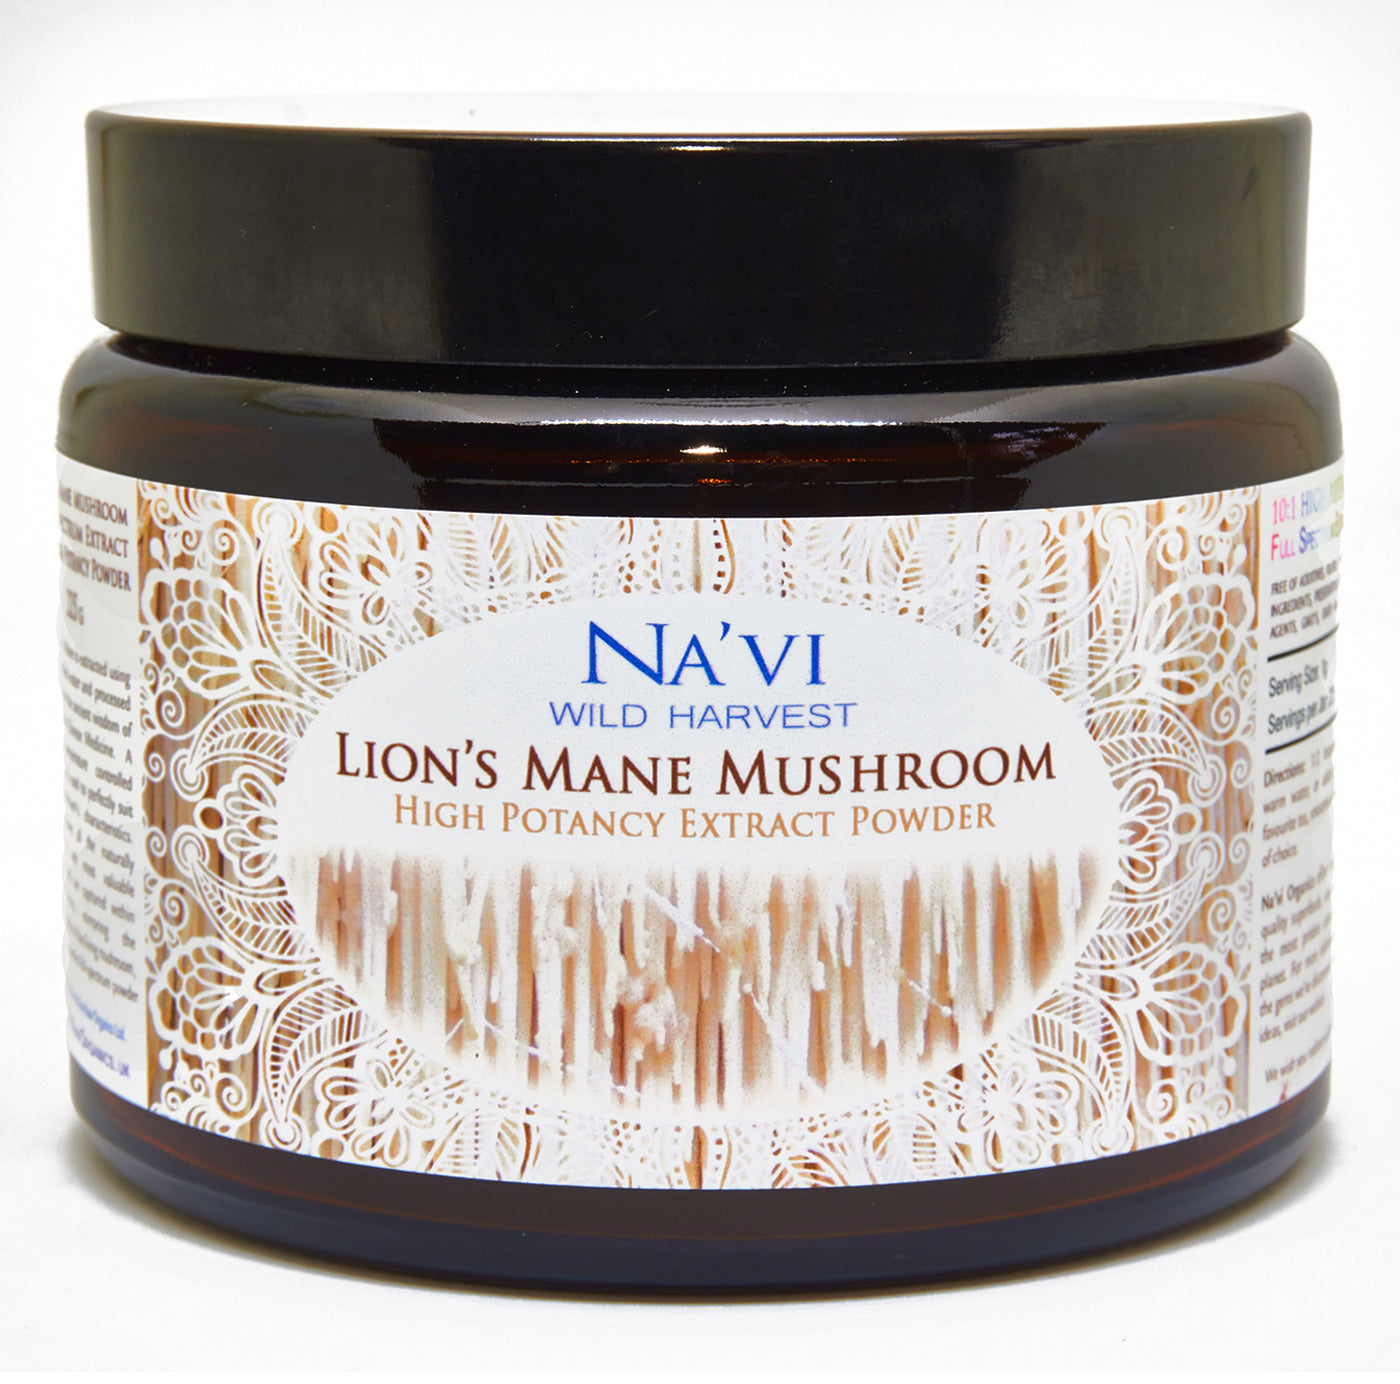 225 gram jar of Lions Mane Mushroom Extract tonic herb powder